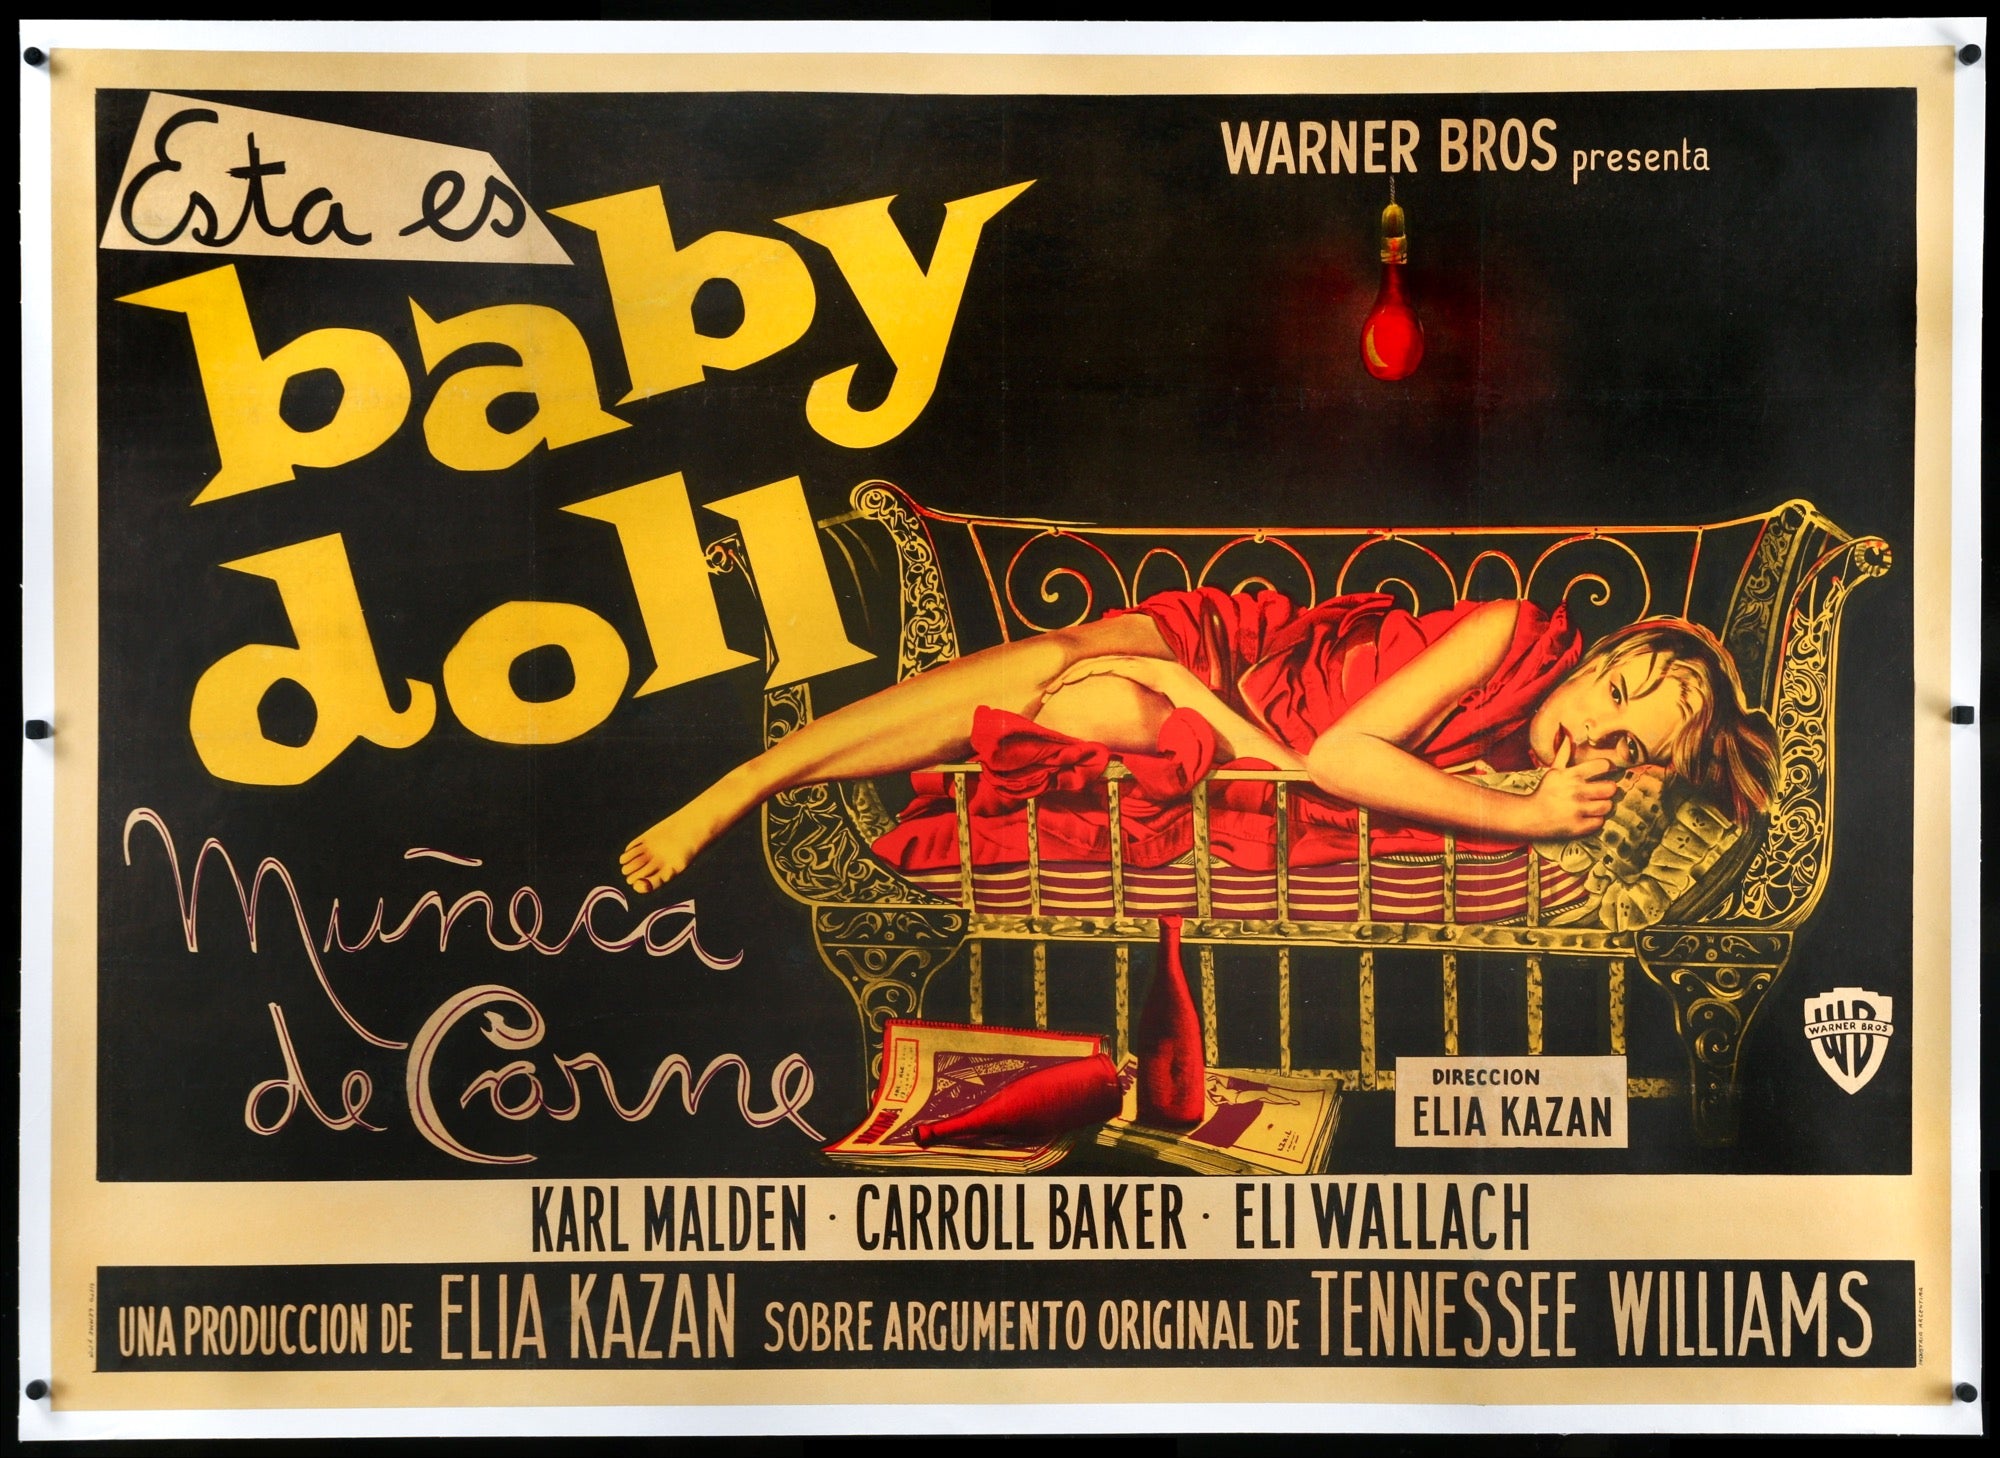 Baby Doll (1956) original movie poster for sale at Original Film Art